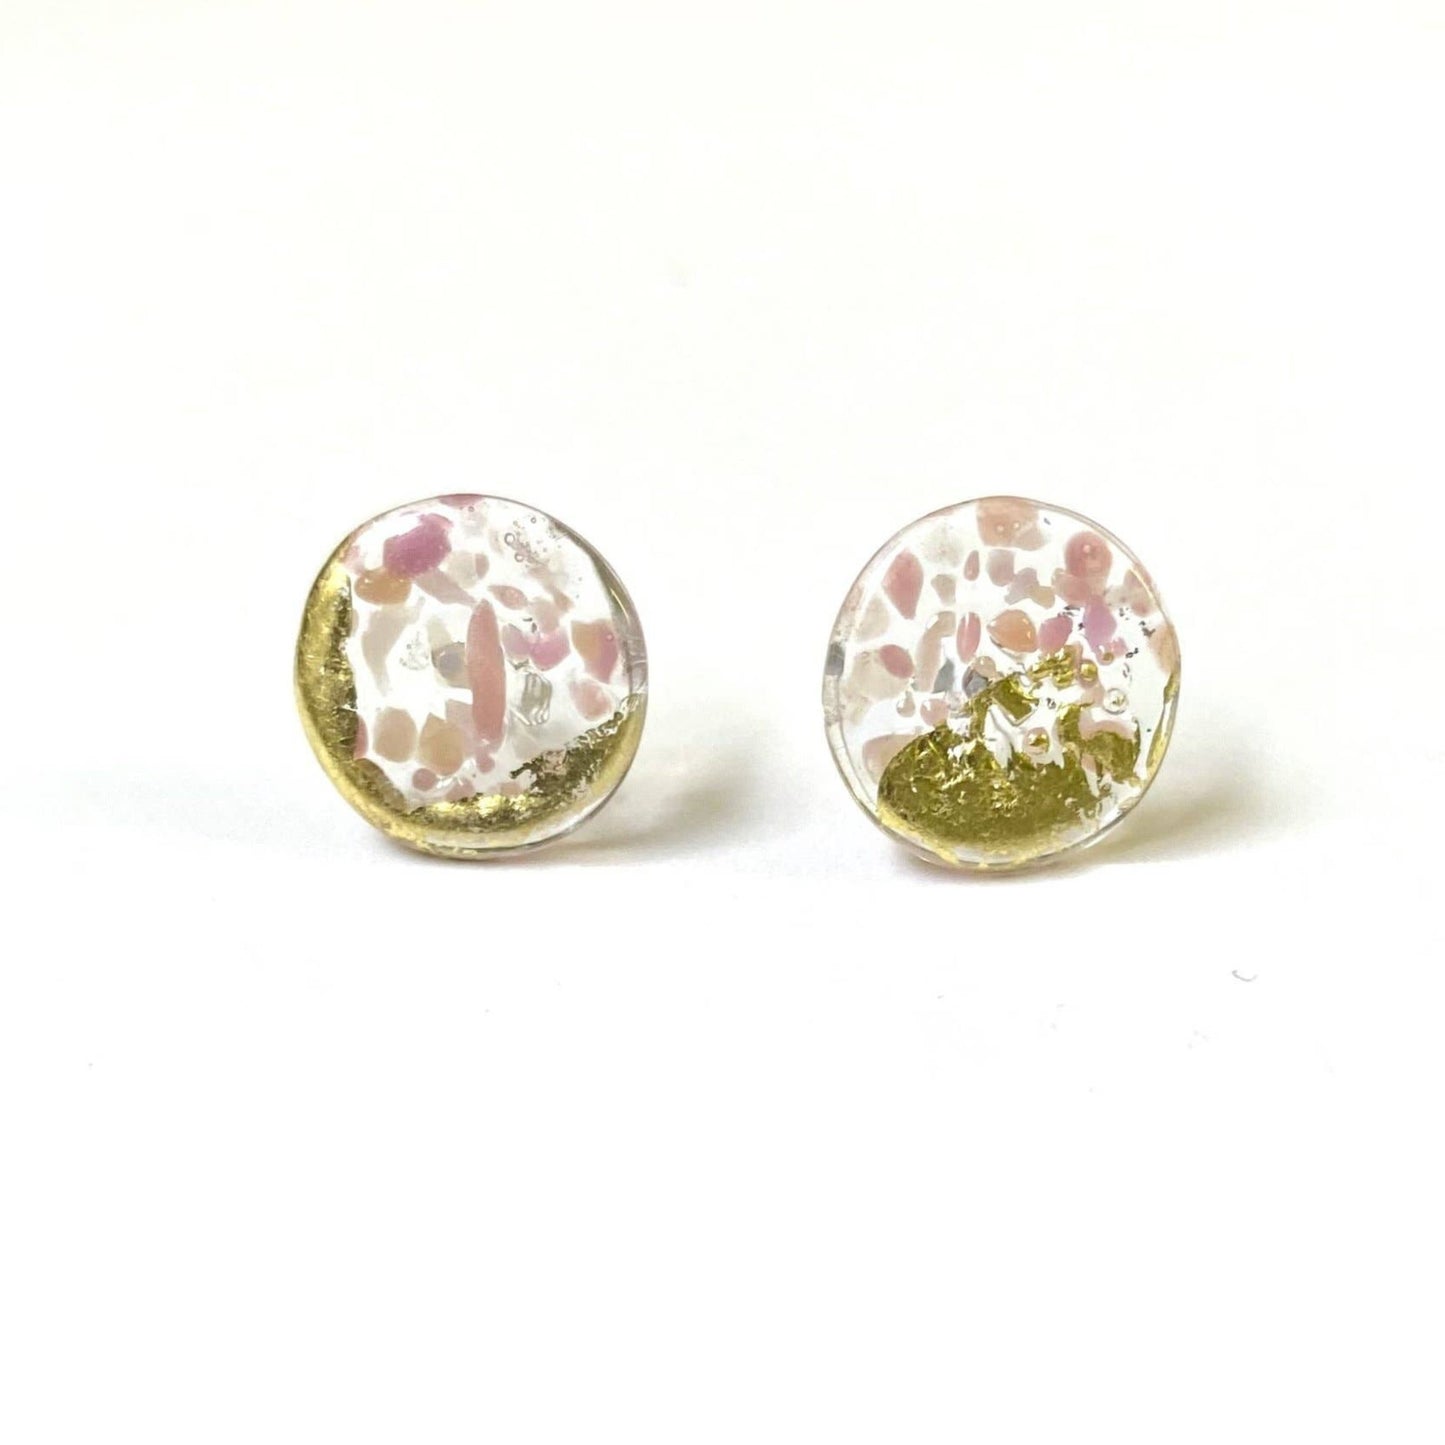 Glass and Gold Midi Mottled Stud Earrings, Sakura - The Little Jewellery Company